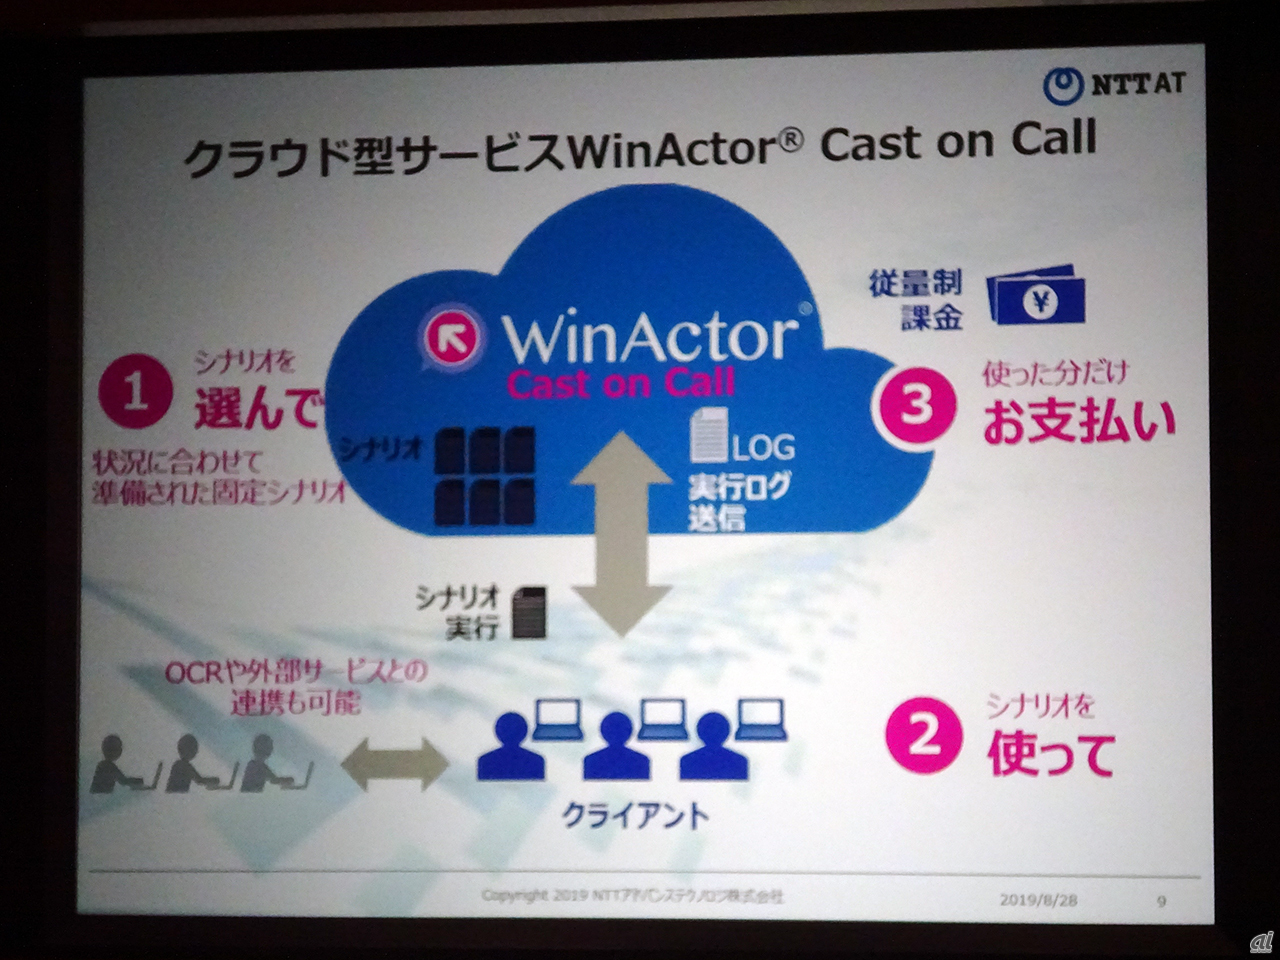 WinActor Cast on Call